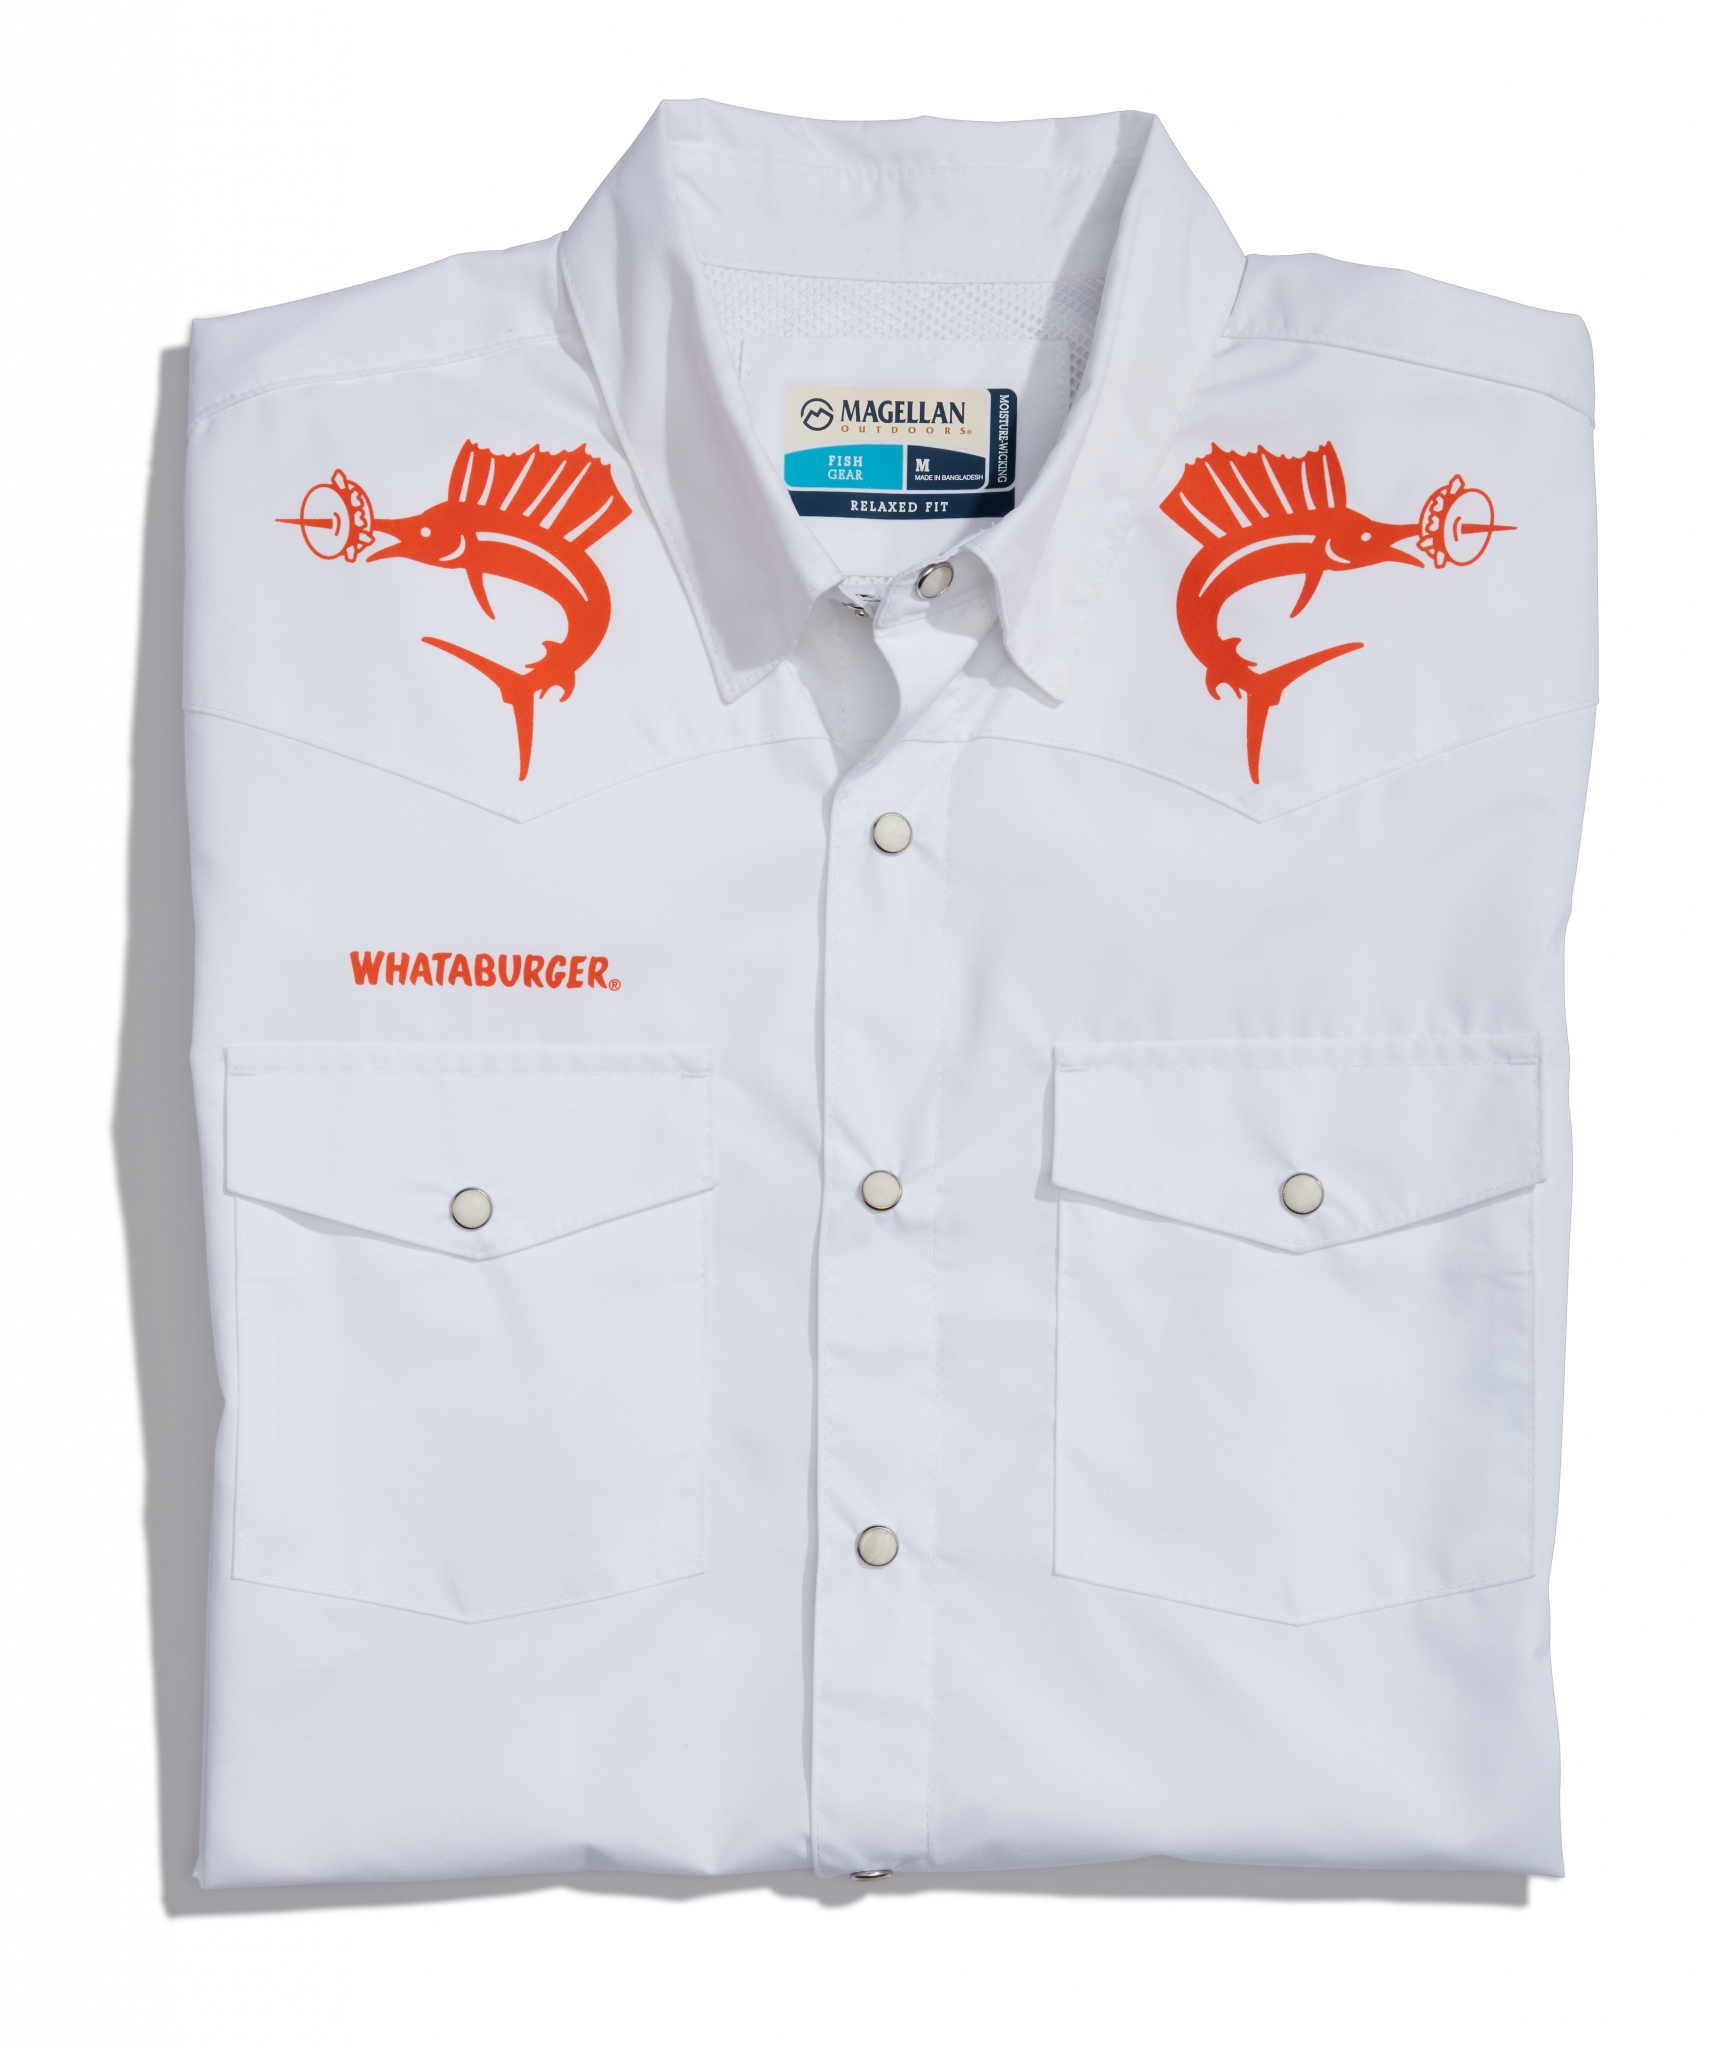 Whata-shirt! Academy releases new Whataburger, Magellan clothing line